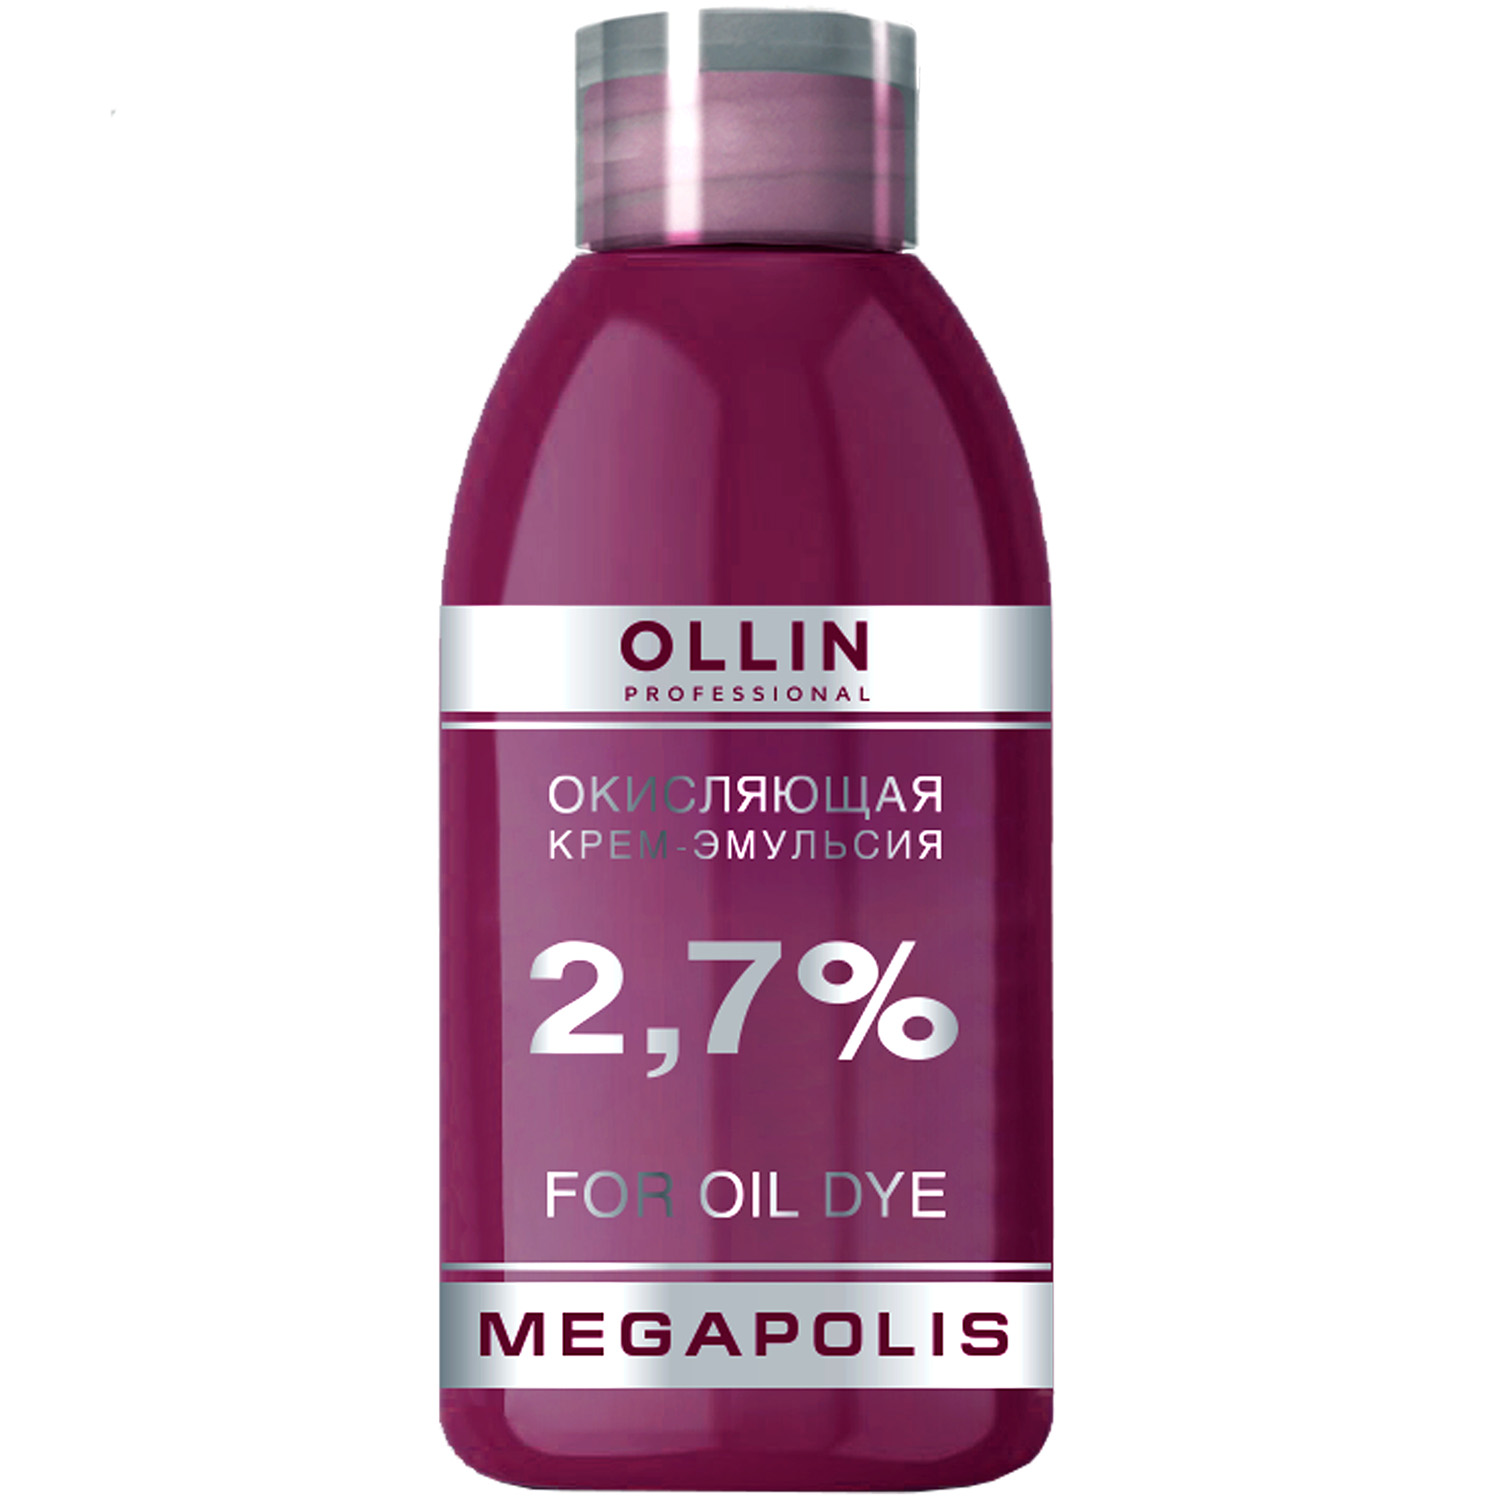 Ollin Professional Окисляющая крем-эмульсия 2,7%, 75 мл (Ollin Professional, Megapolis) окисляющая крем эмульсия megapolis 2 7% 500 мл